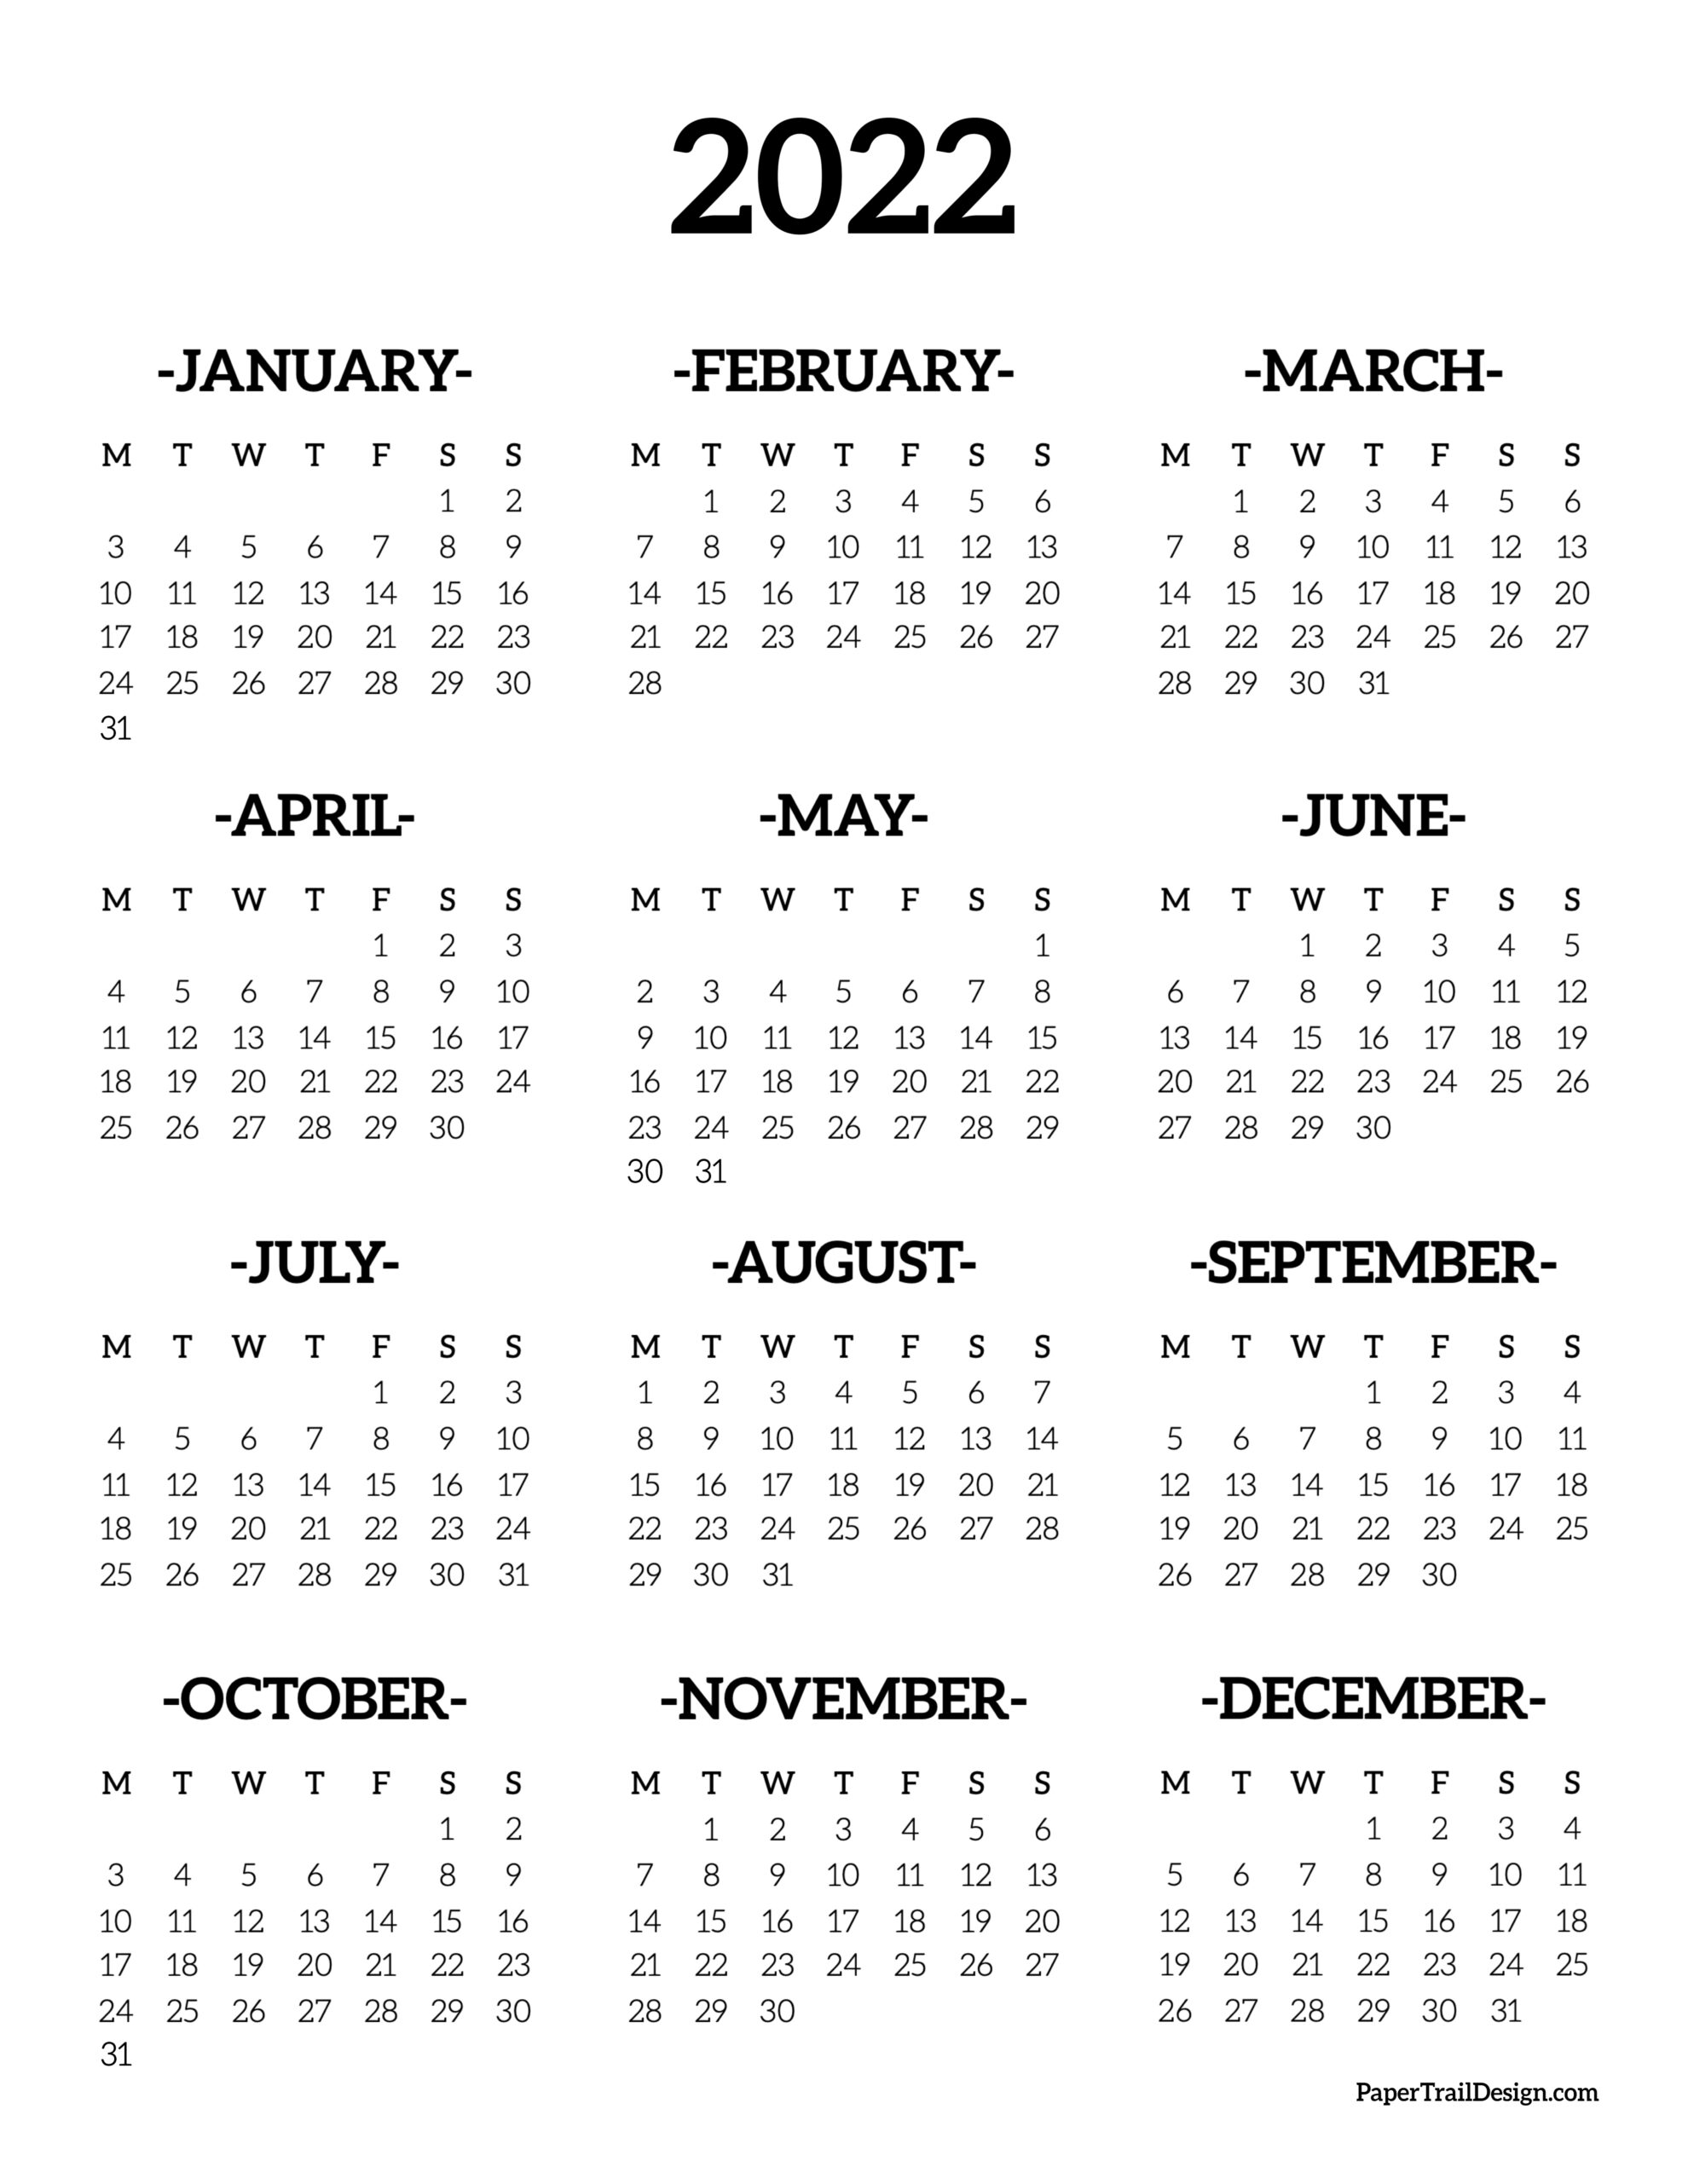 Monday Start Calendar 2022 2022 Monday Start Calendar- One Page - Paper Trail Design